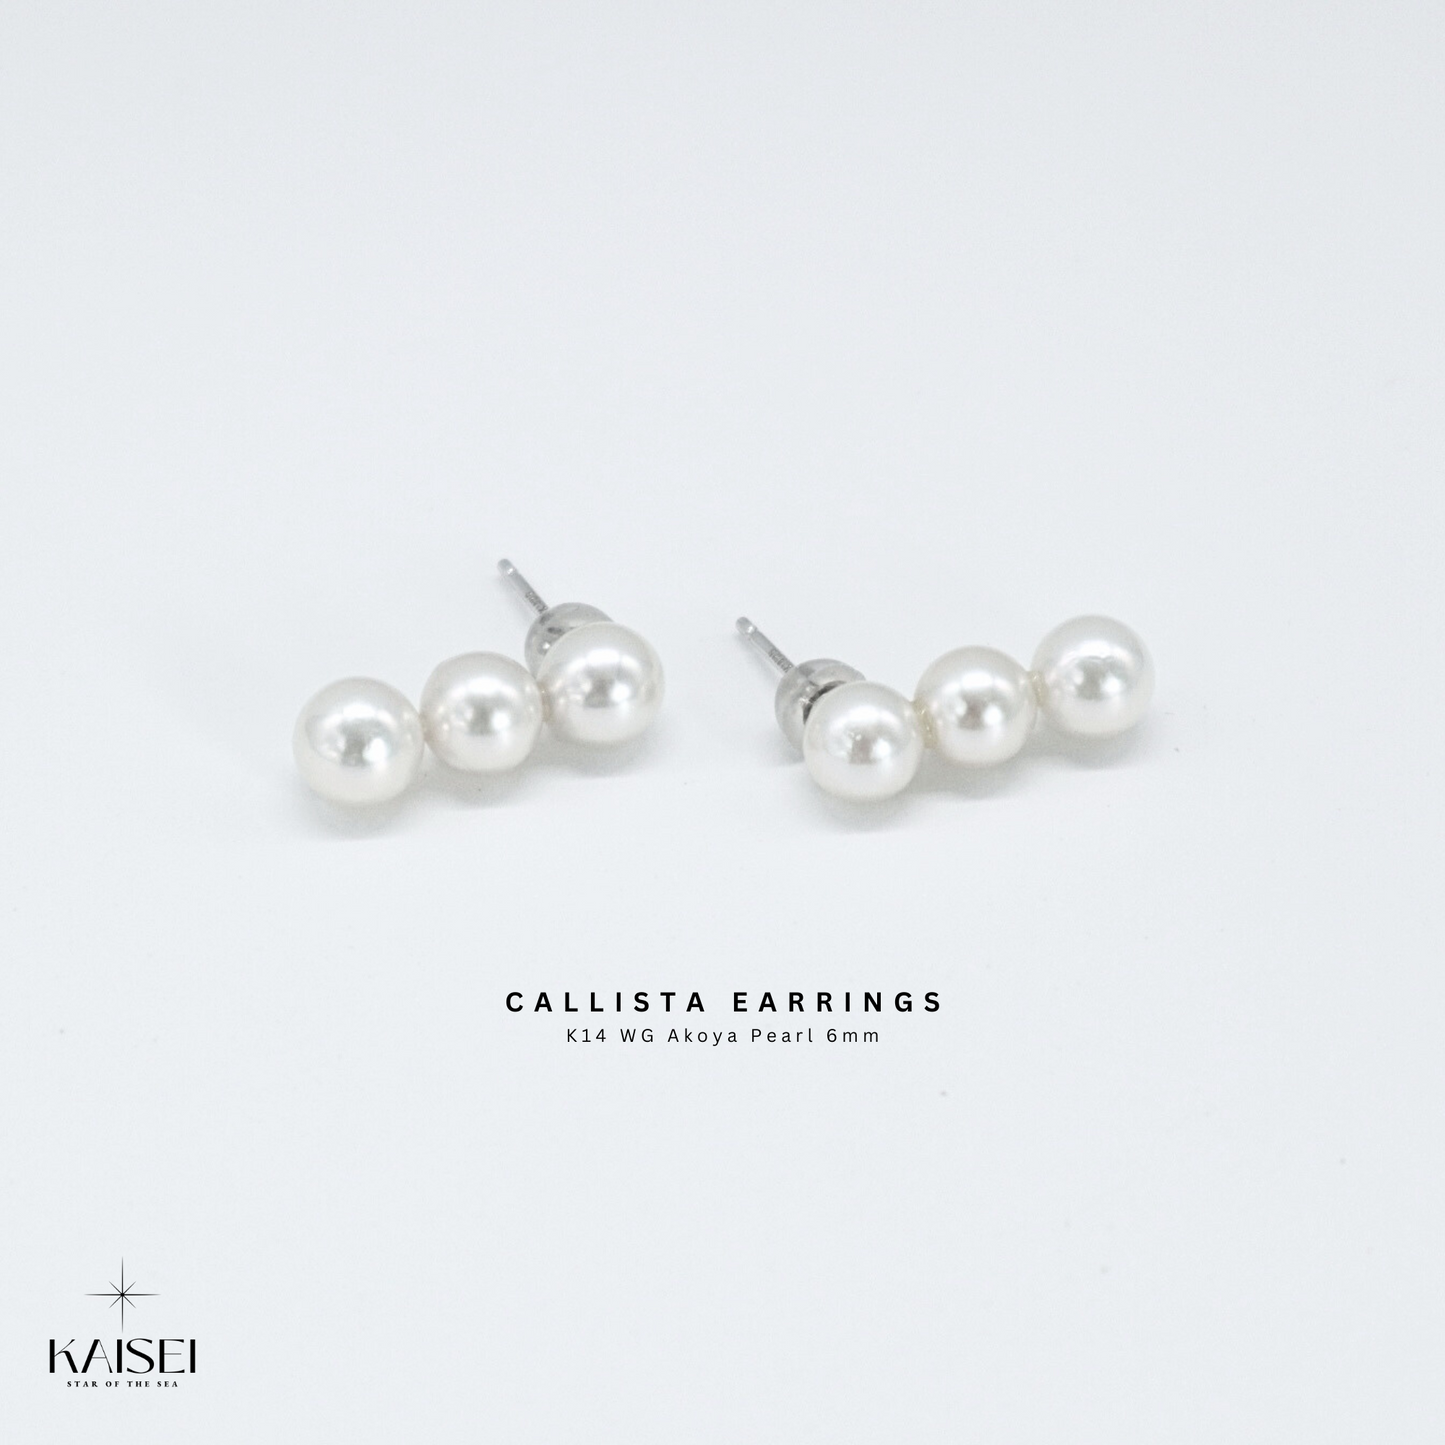 Kaisei Pearl - Callista Earrings K14 WG Akoya Pearl 6mm Japanese Pearl Jewelry